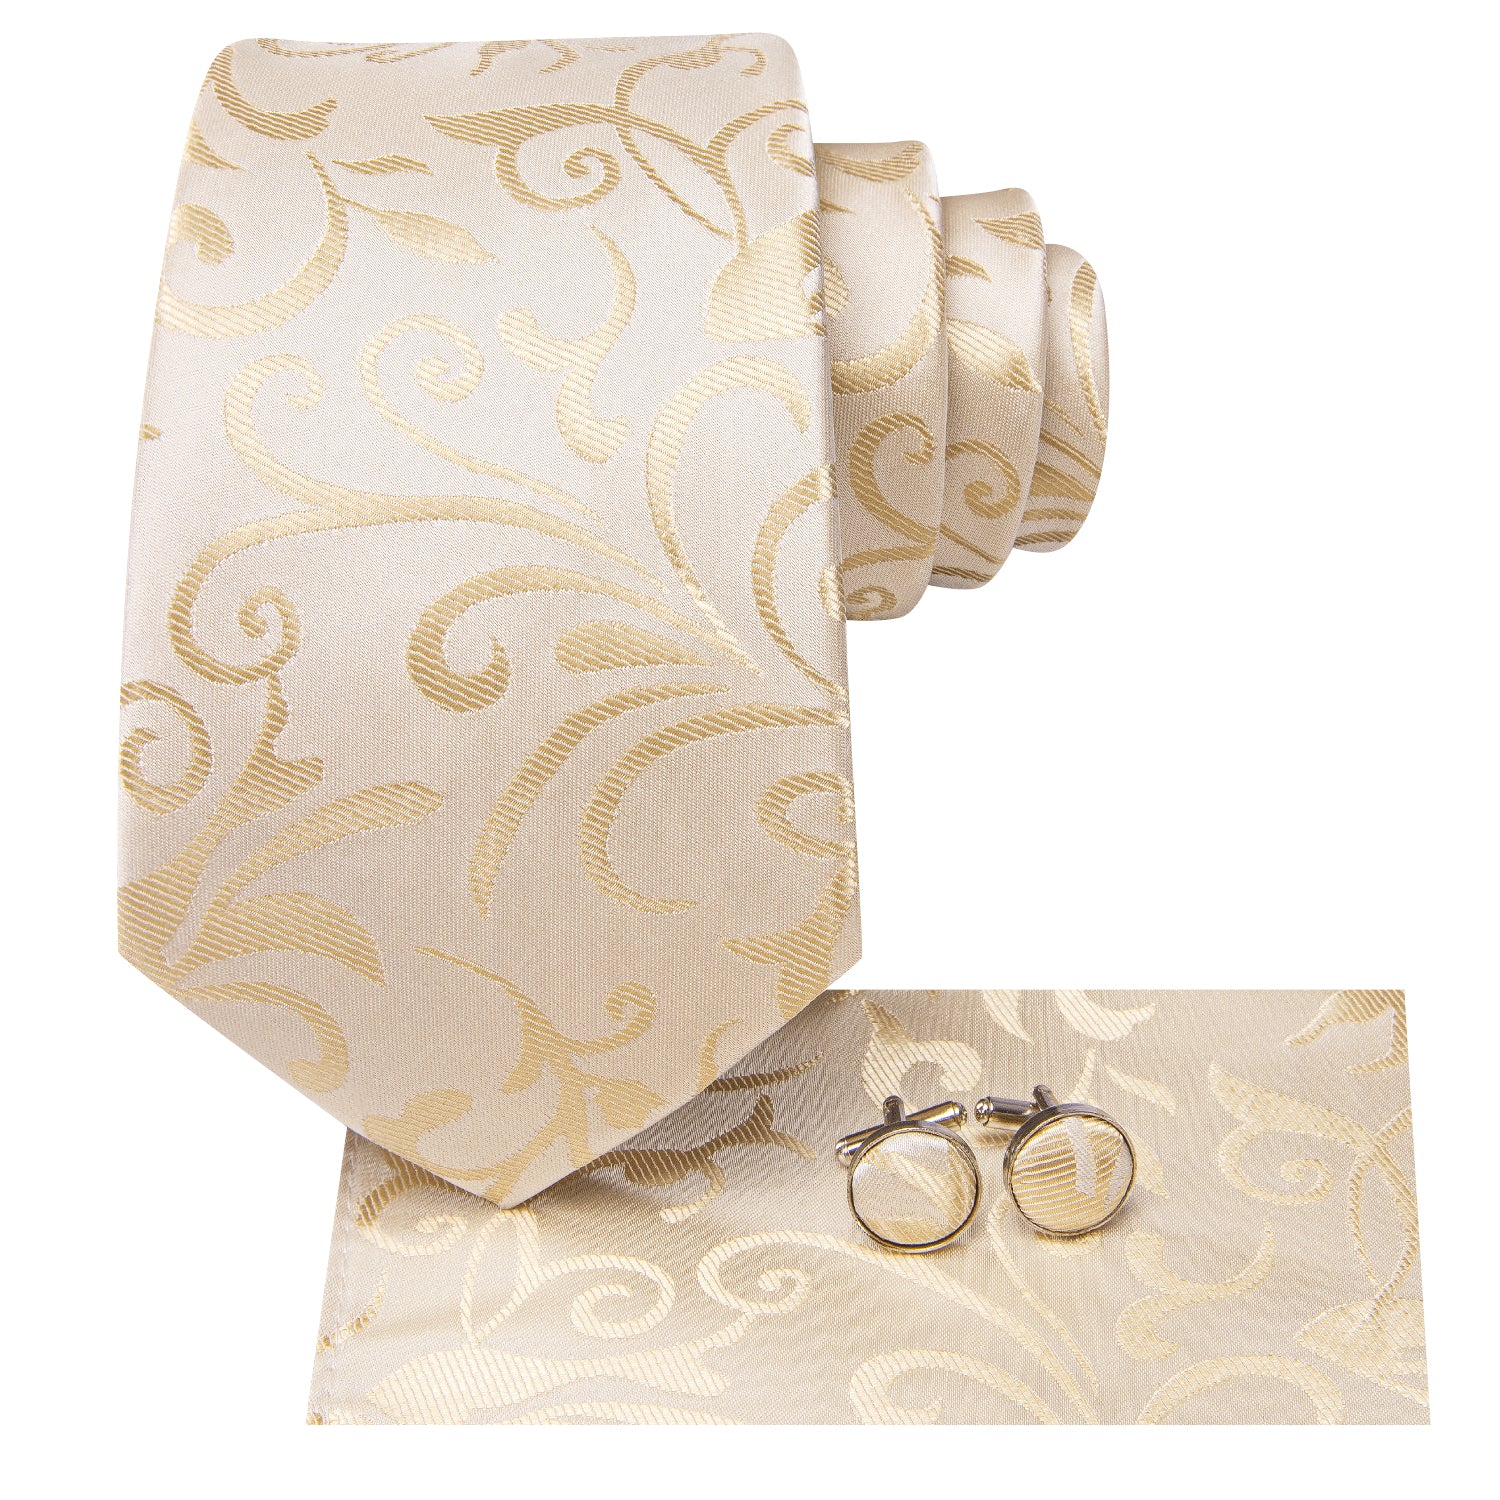 Hi-Tie Beige Floral Men's Tie Pocket Square Cufflinks Set